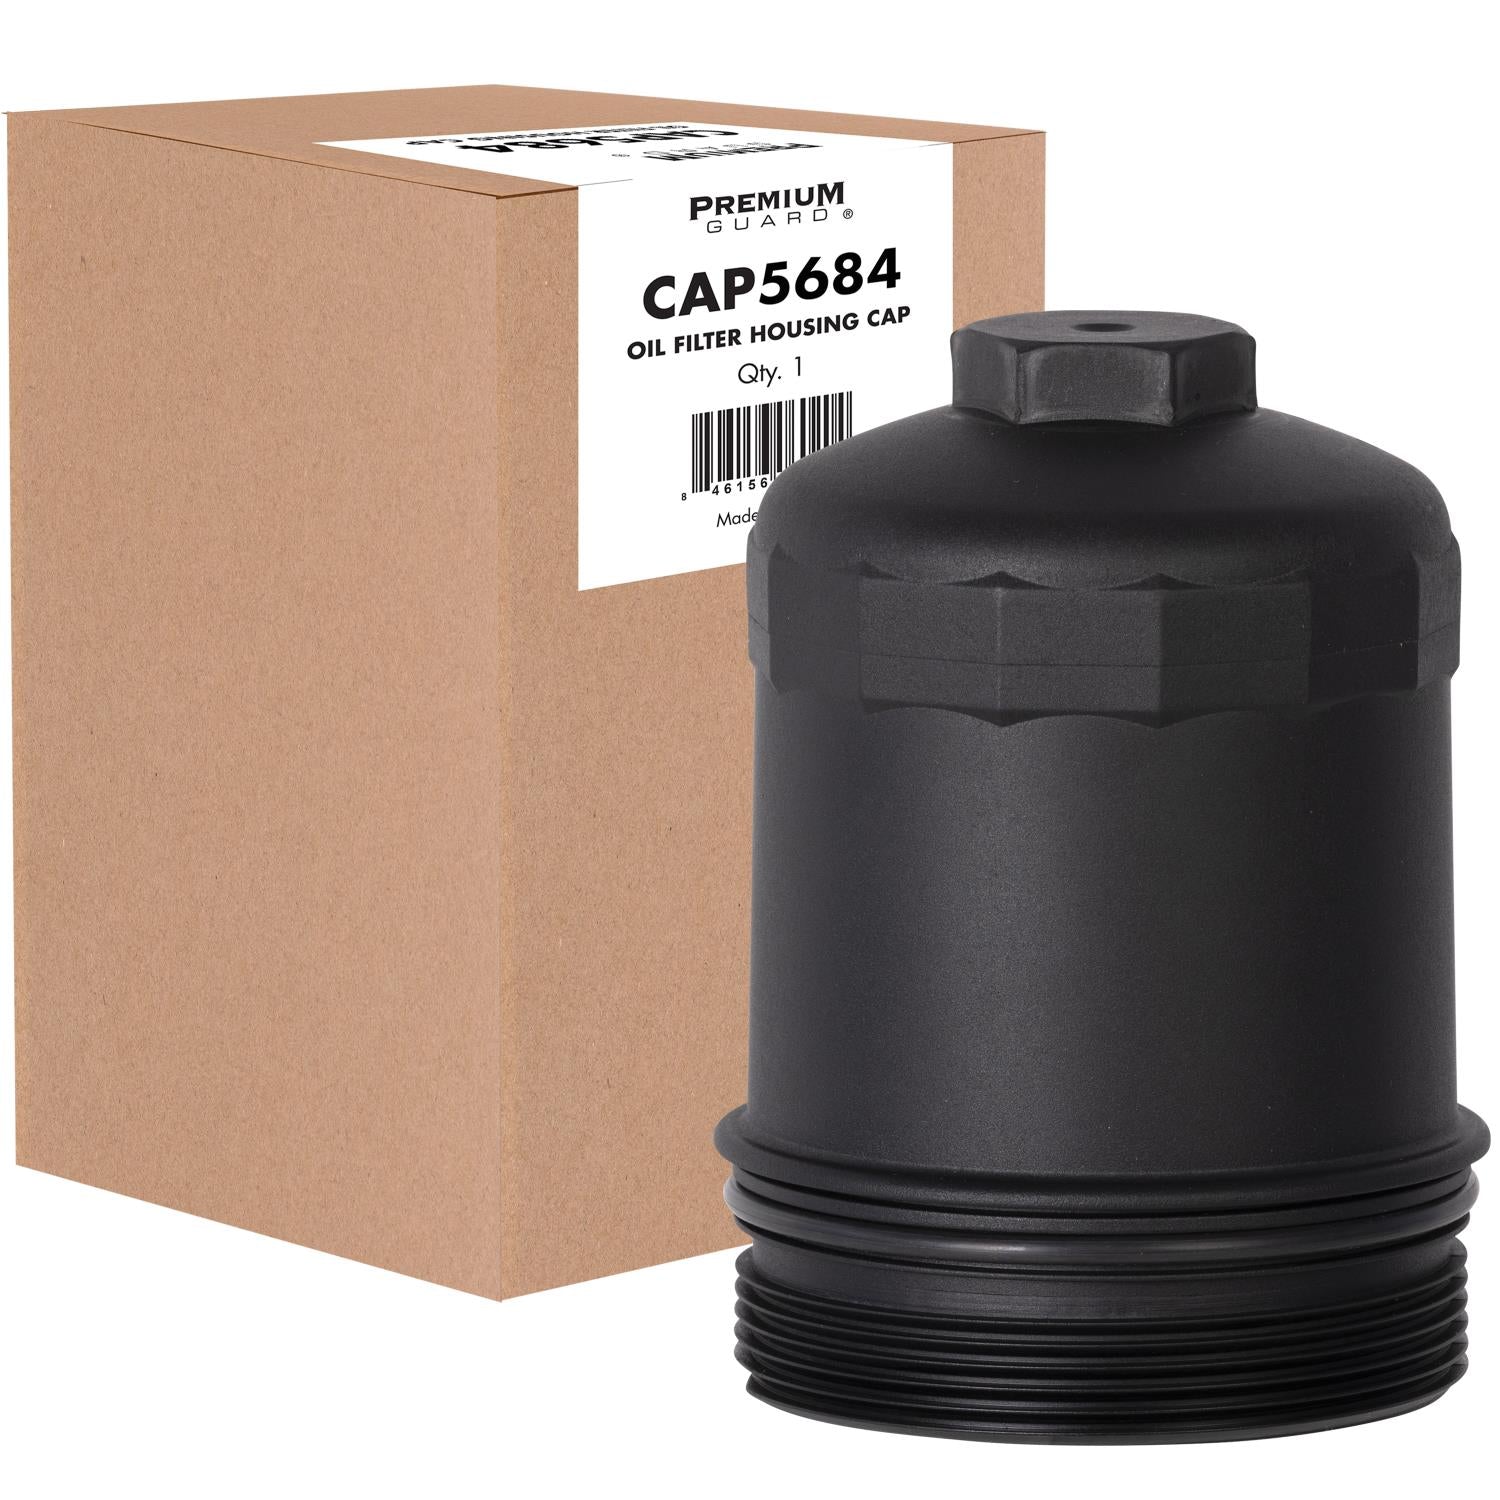 Oil Filter Housing Cap CAP5684